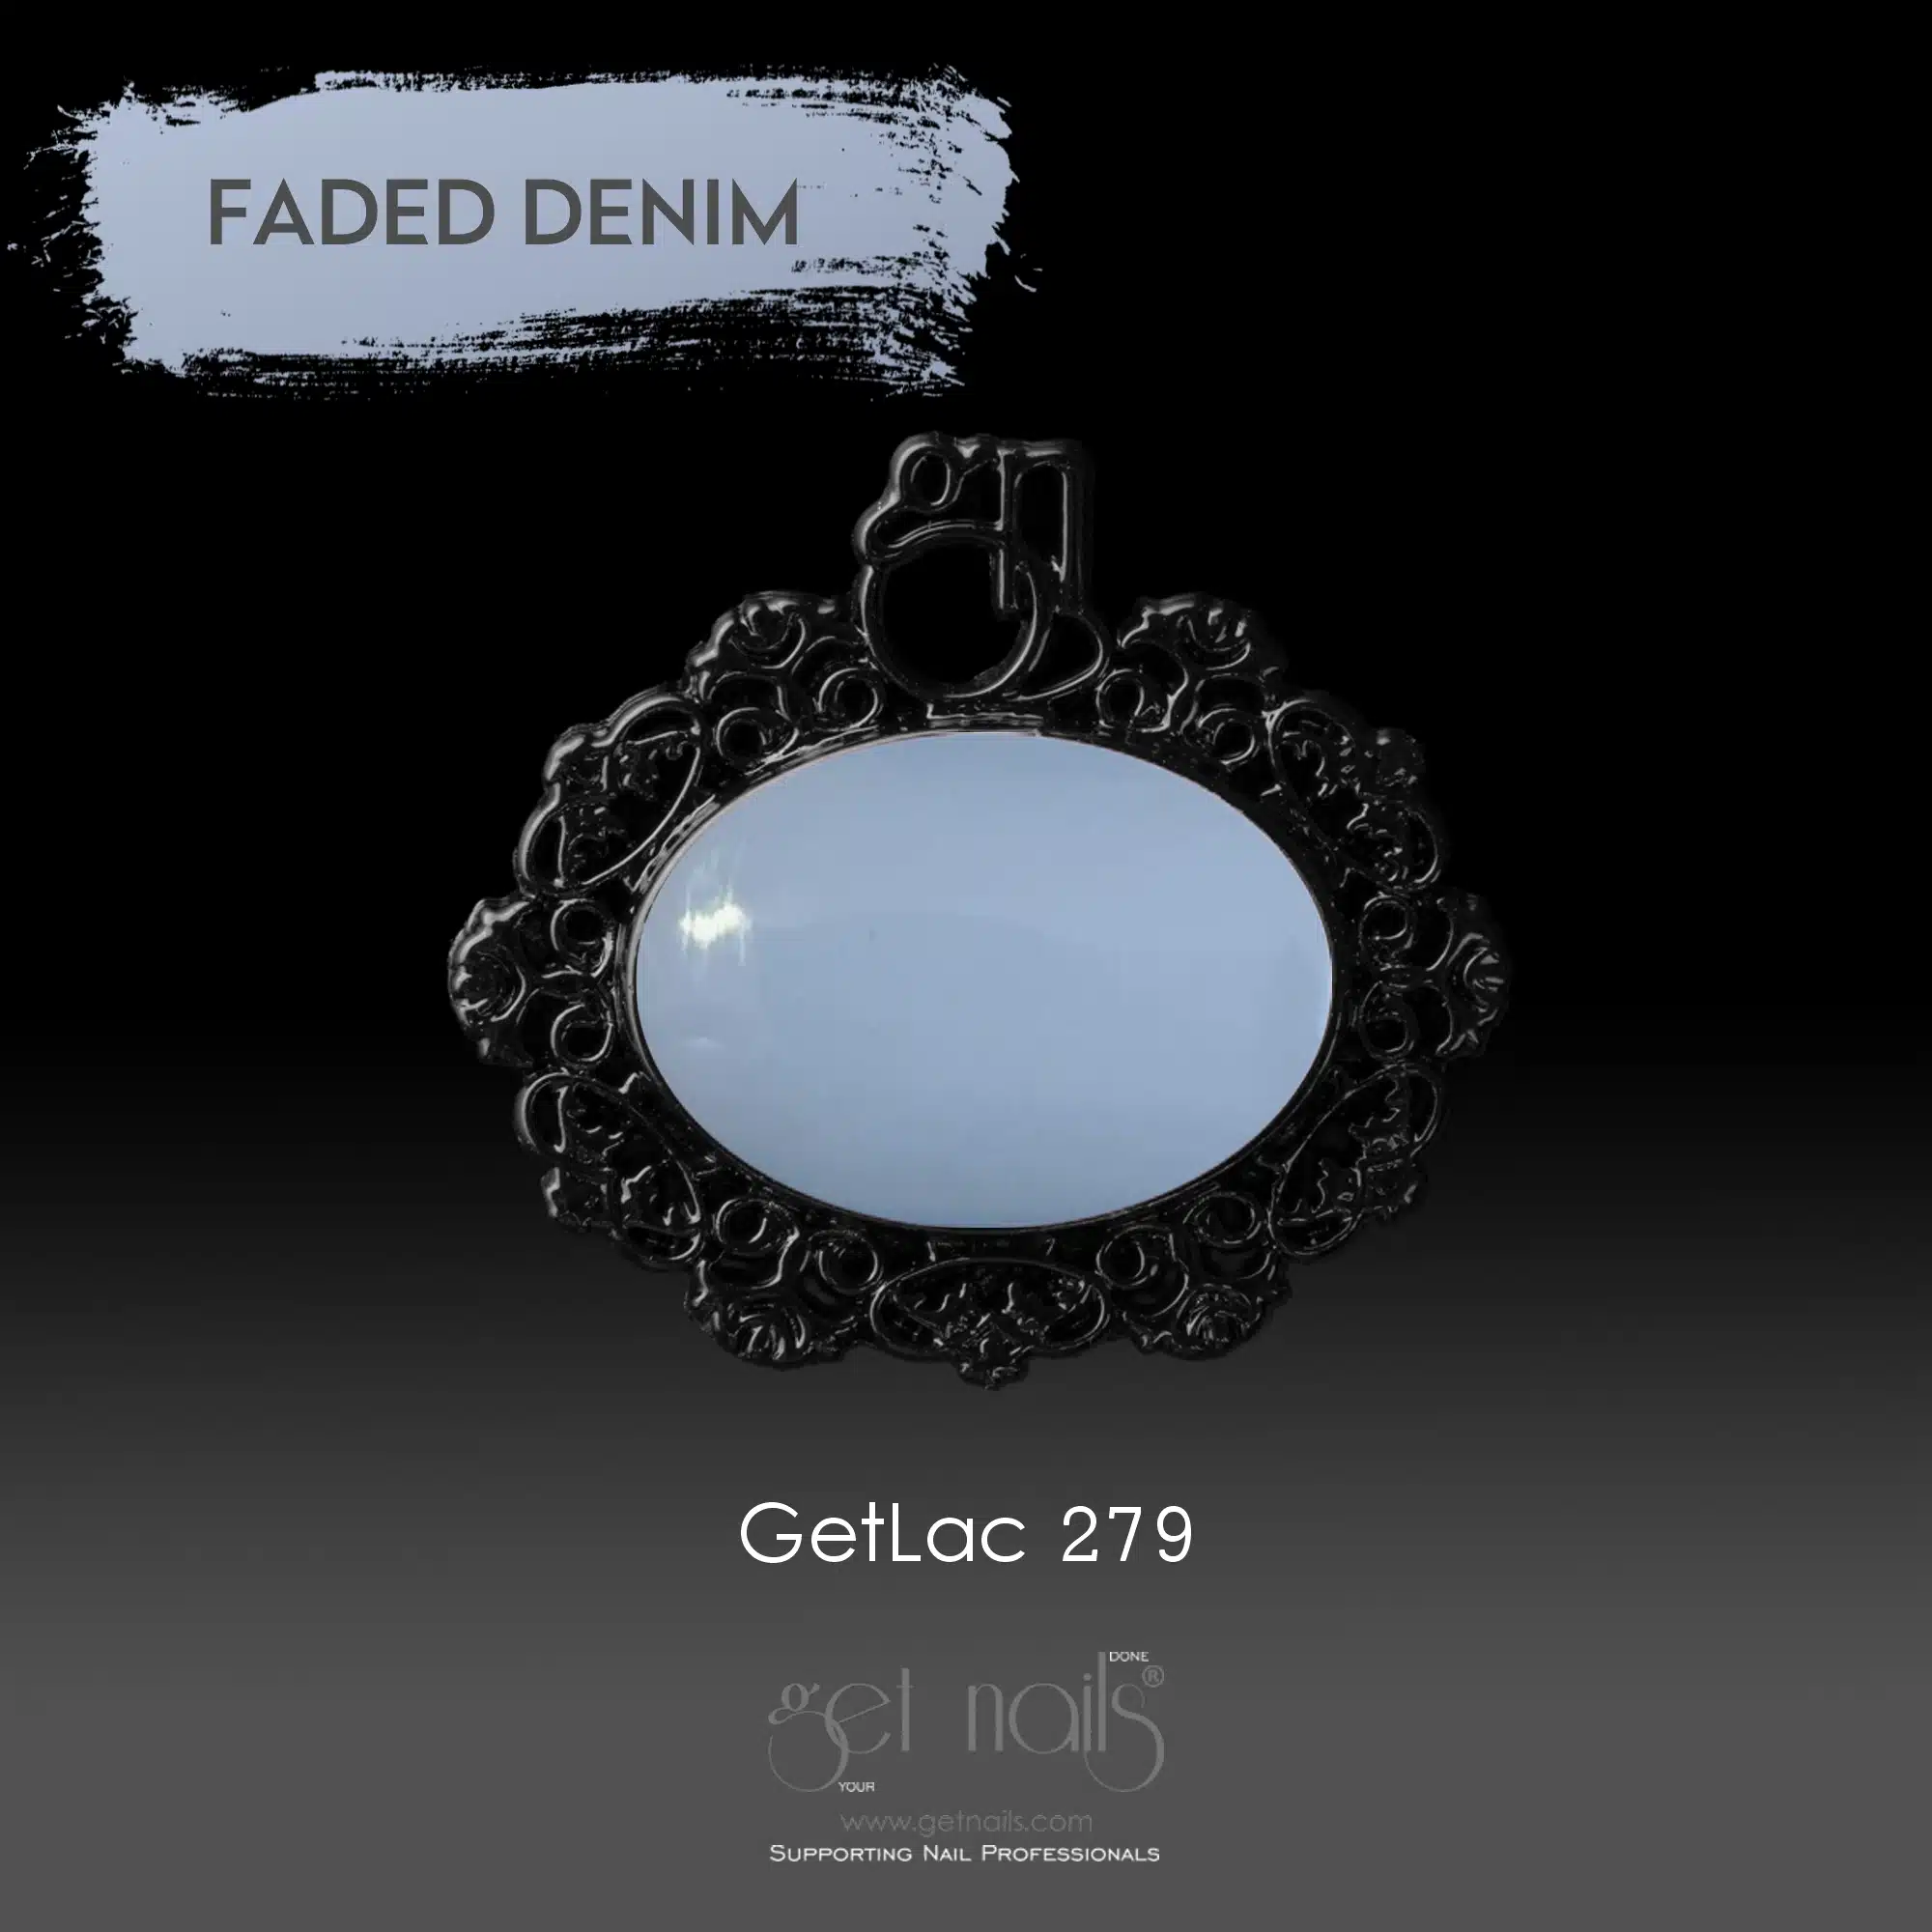 Get Nails Austria - GetLac 279 15g Faded Denim